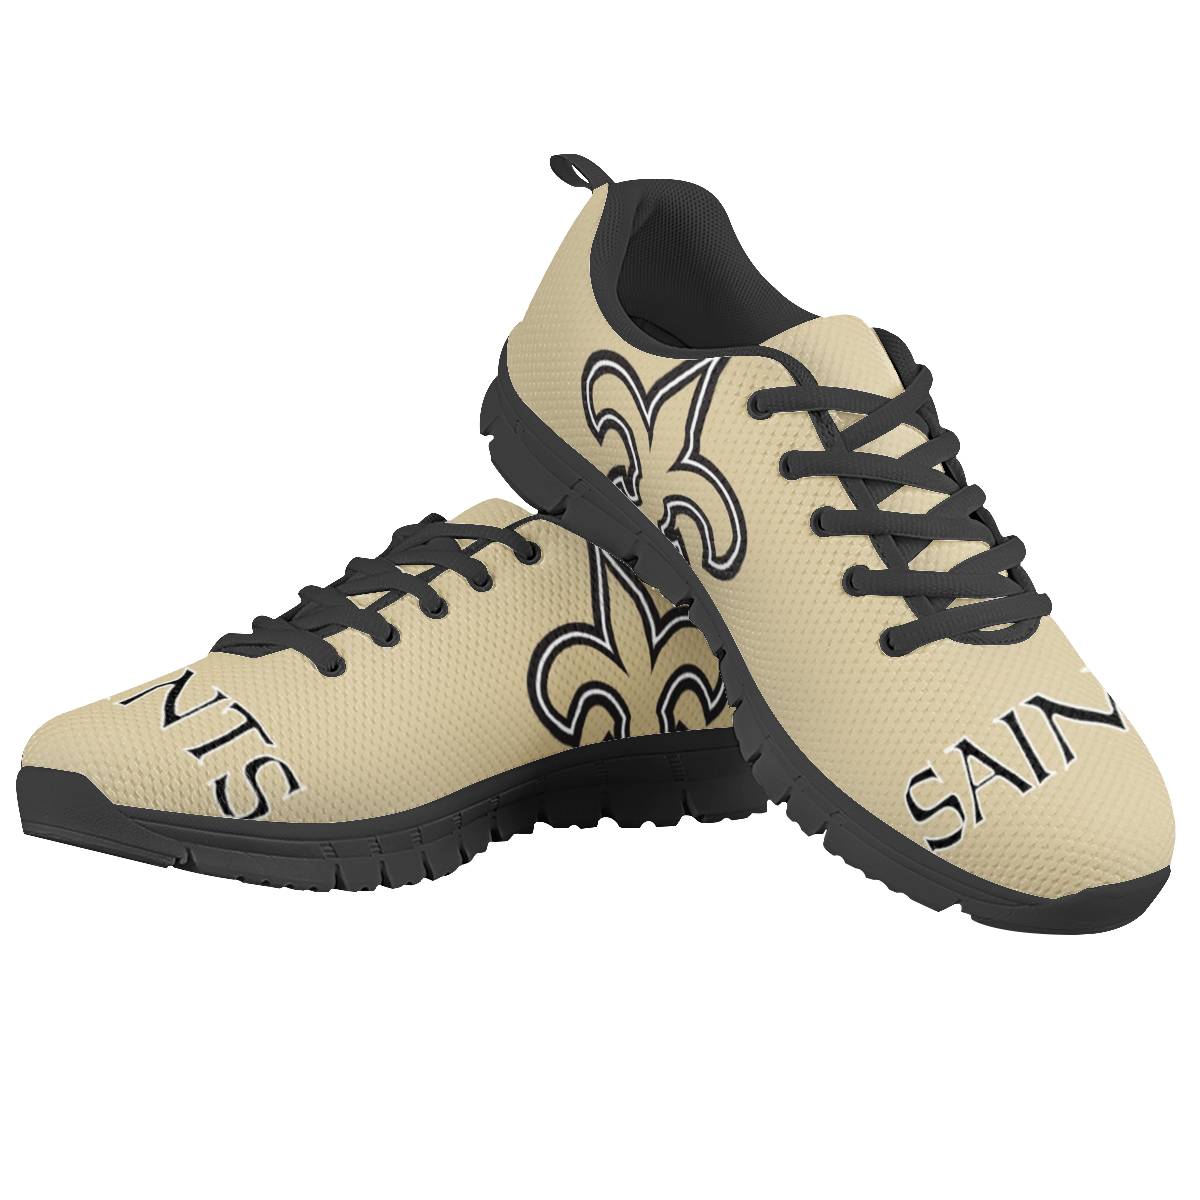 Men's New Orleans Saints AQ Running Shoes 001